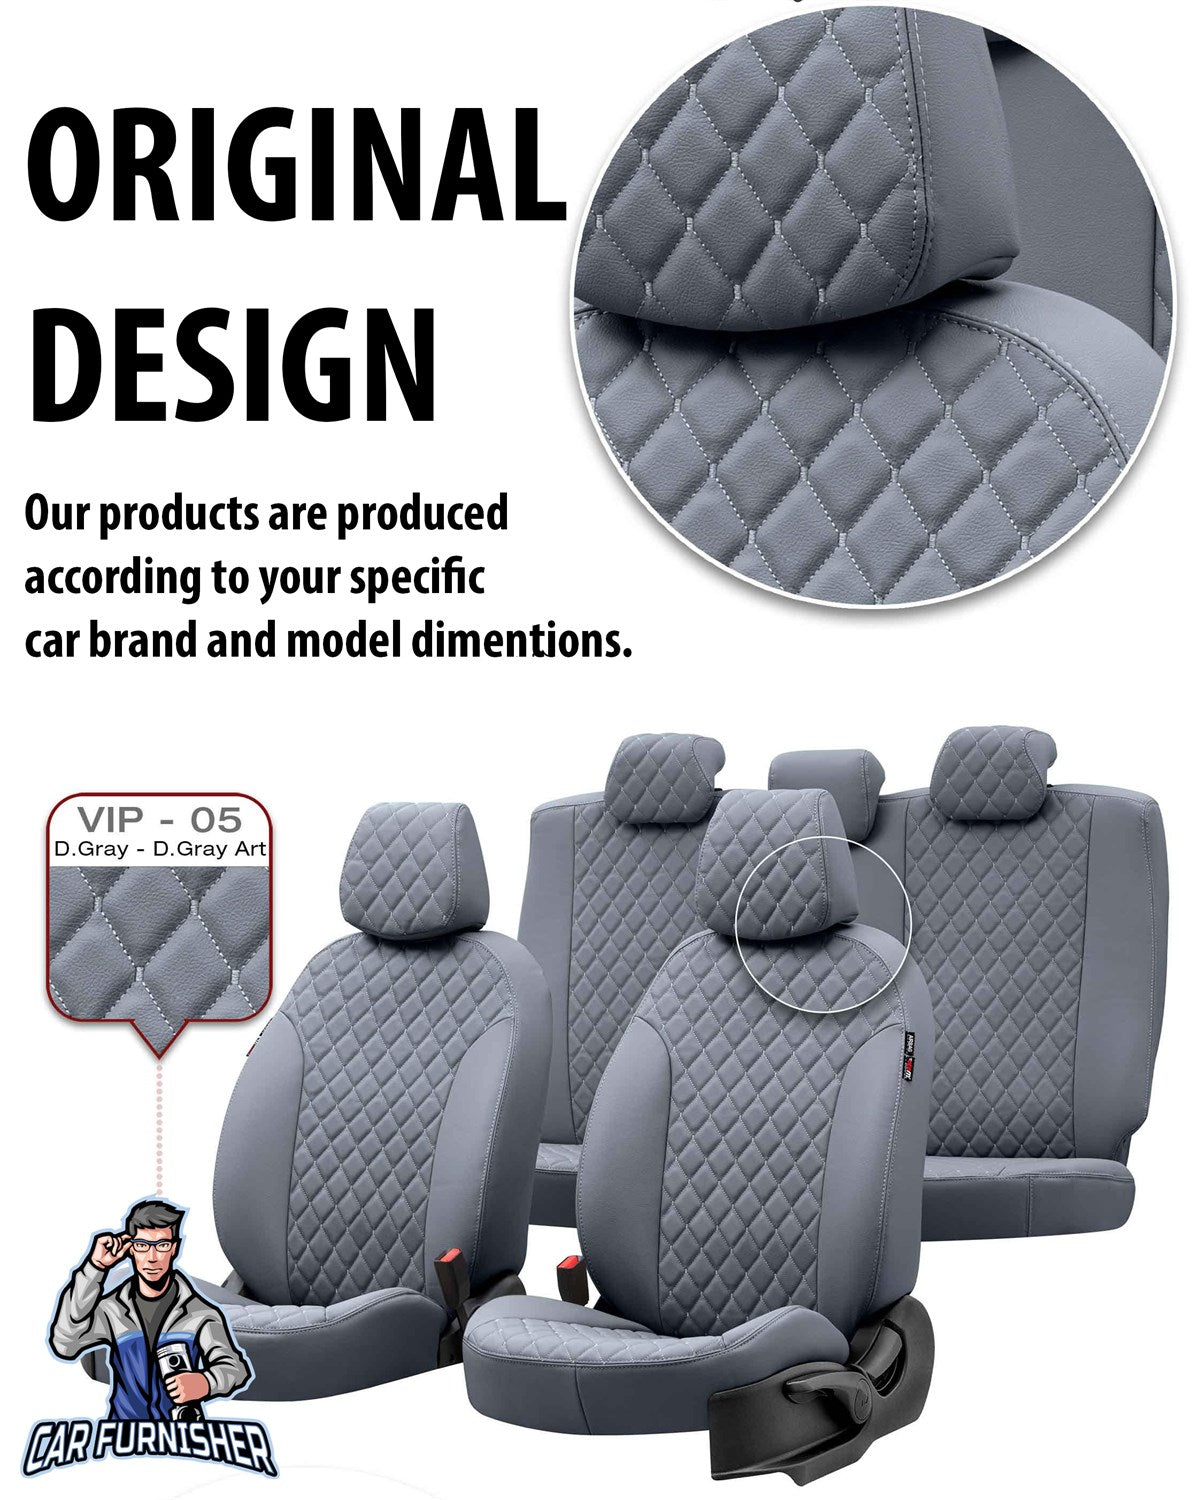 Tata Xenon Seat Covers Madrid Leather Design Dark Gray Leather